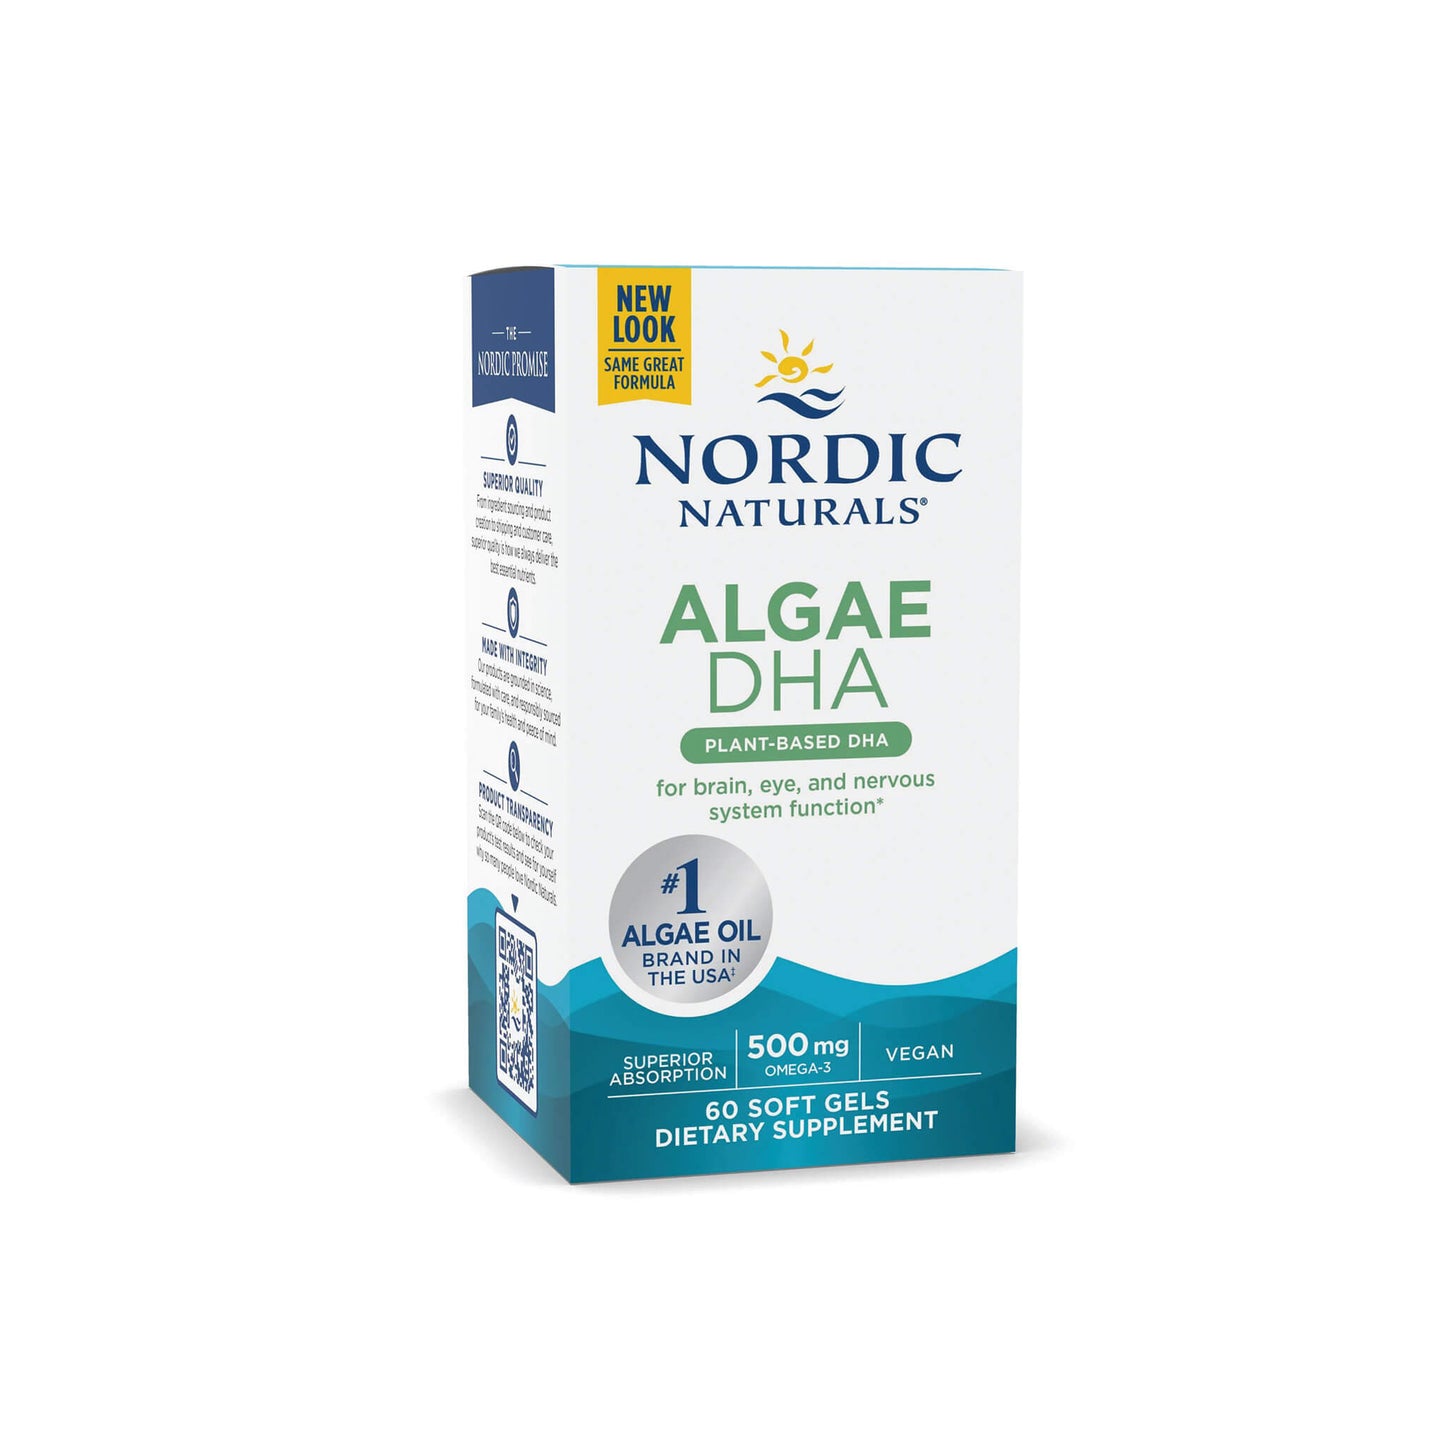 Nordic Naturals Algae DHA, 500mg - 60 Soft Gels